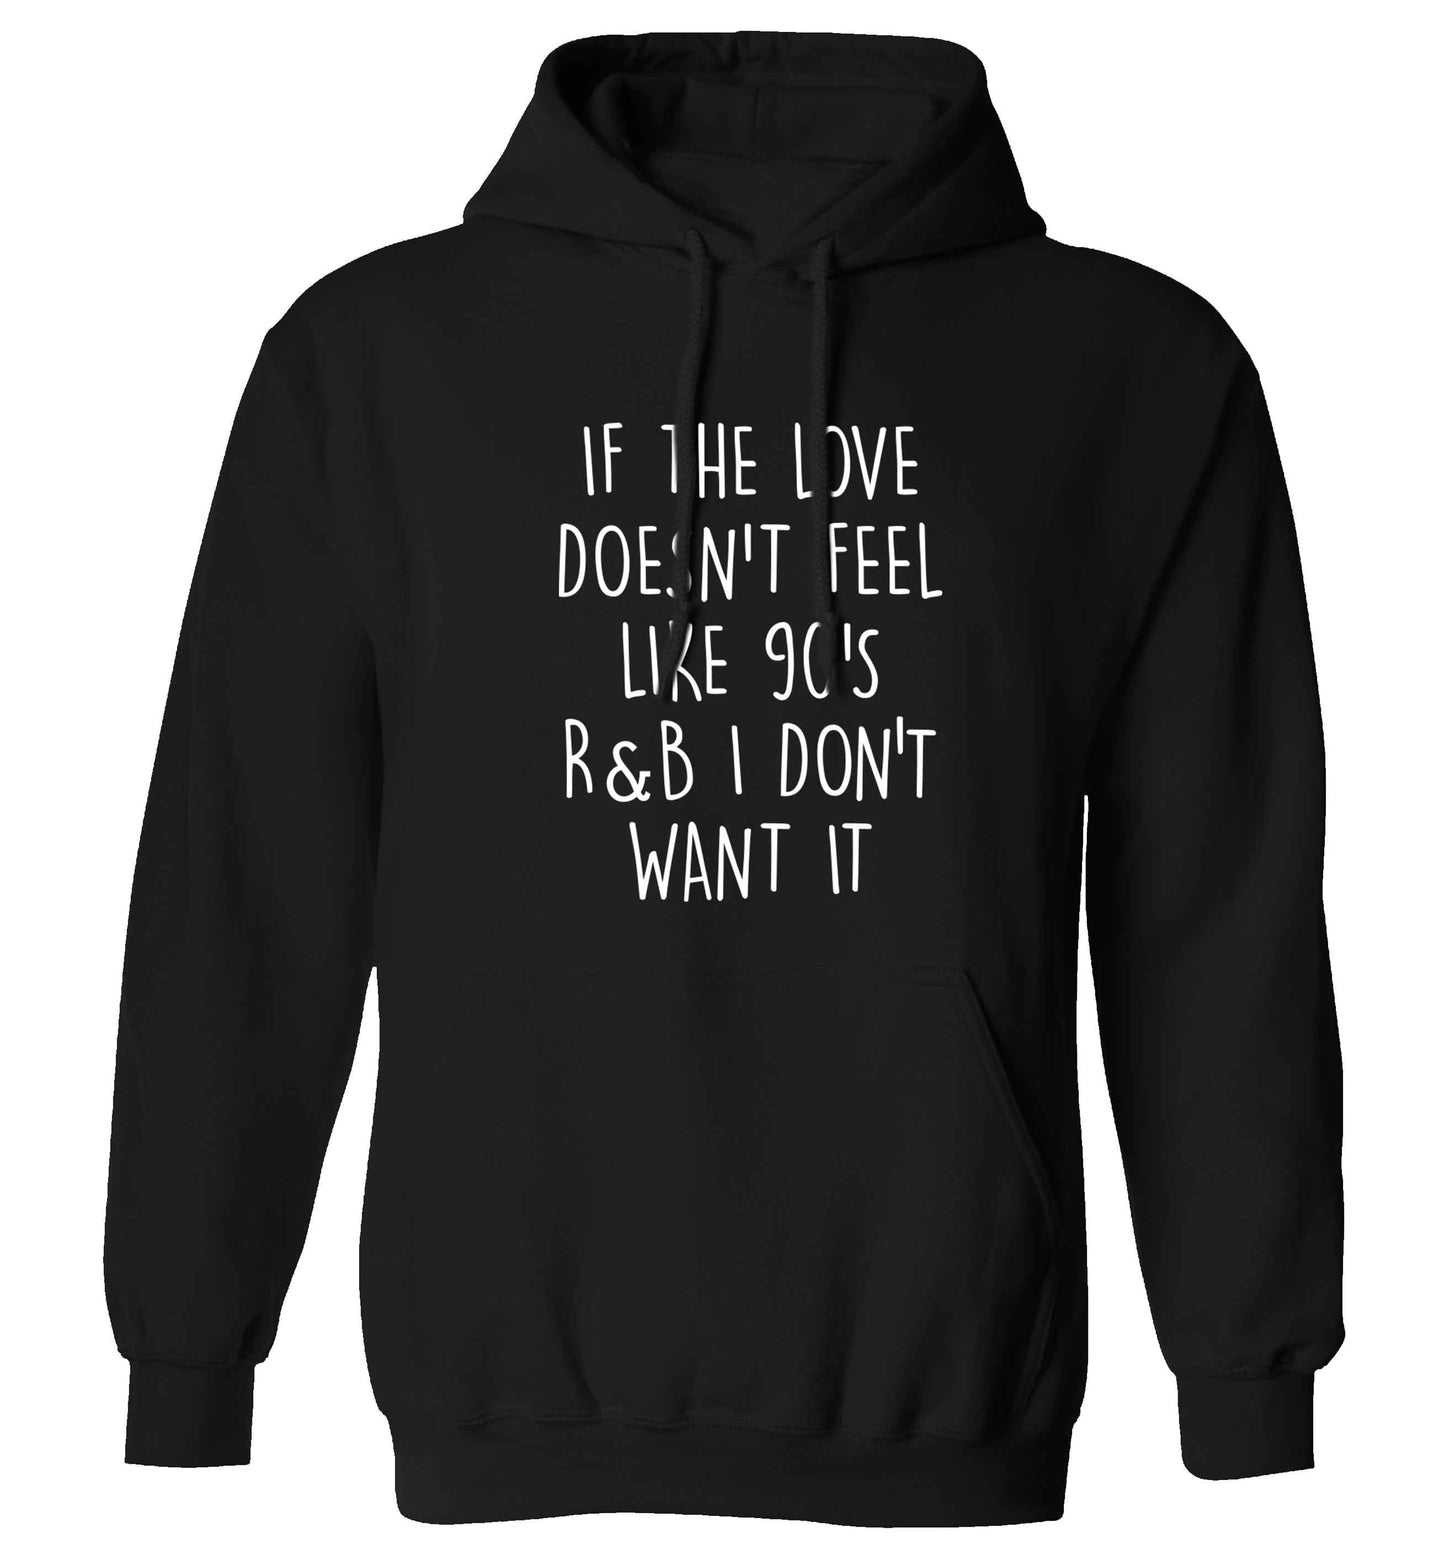 If the love doesn't feel like 90's r&b I don't want it adults unisex black hoodie 2XL